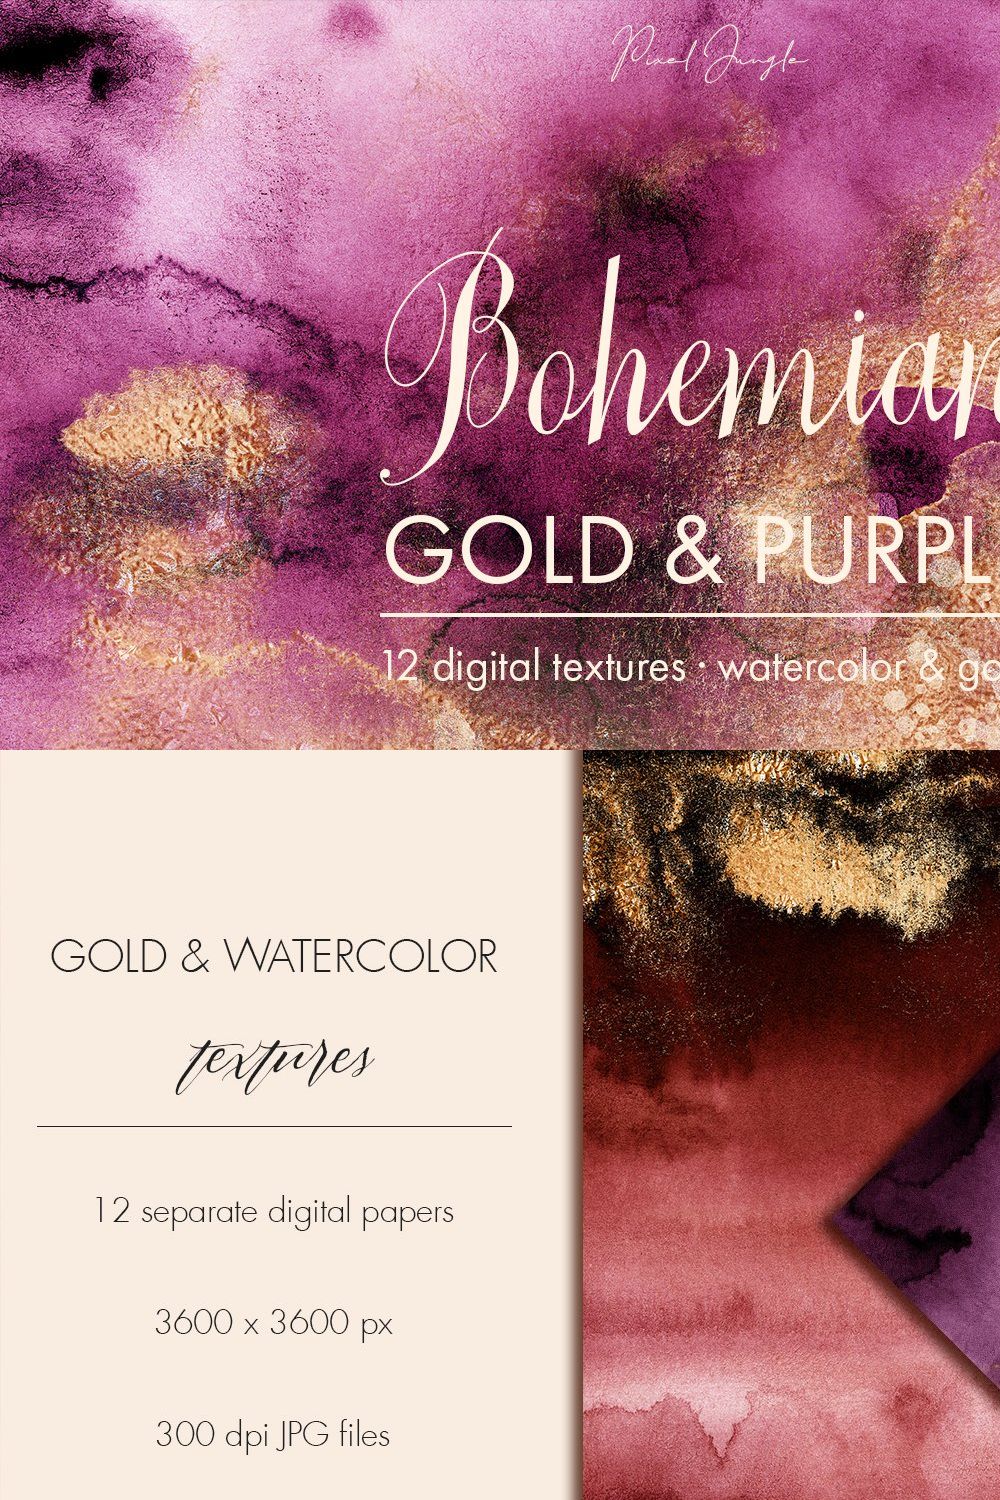 Bohemian watercolor & gold textures pinterest preview image.